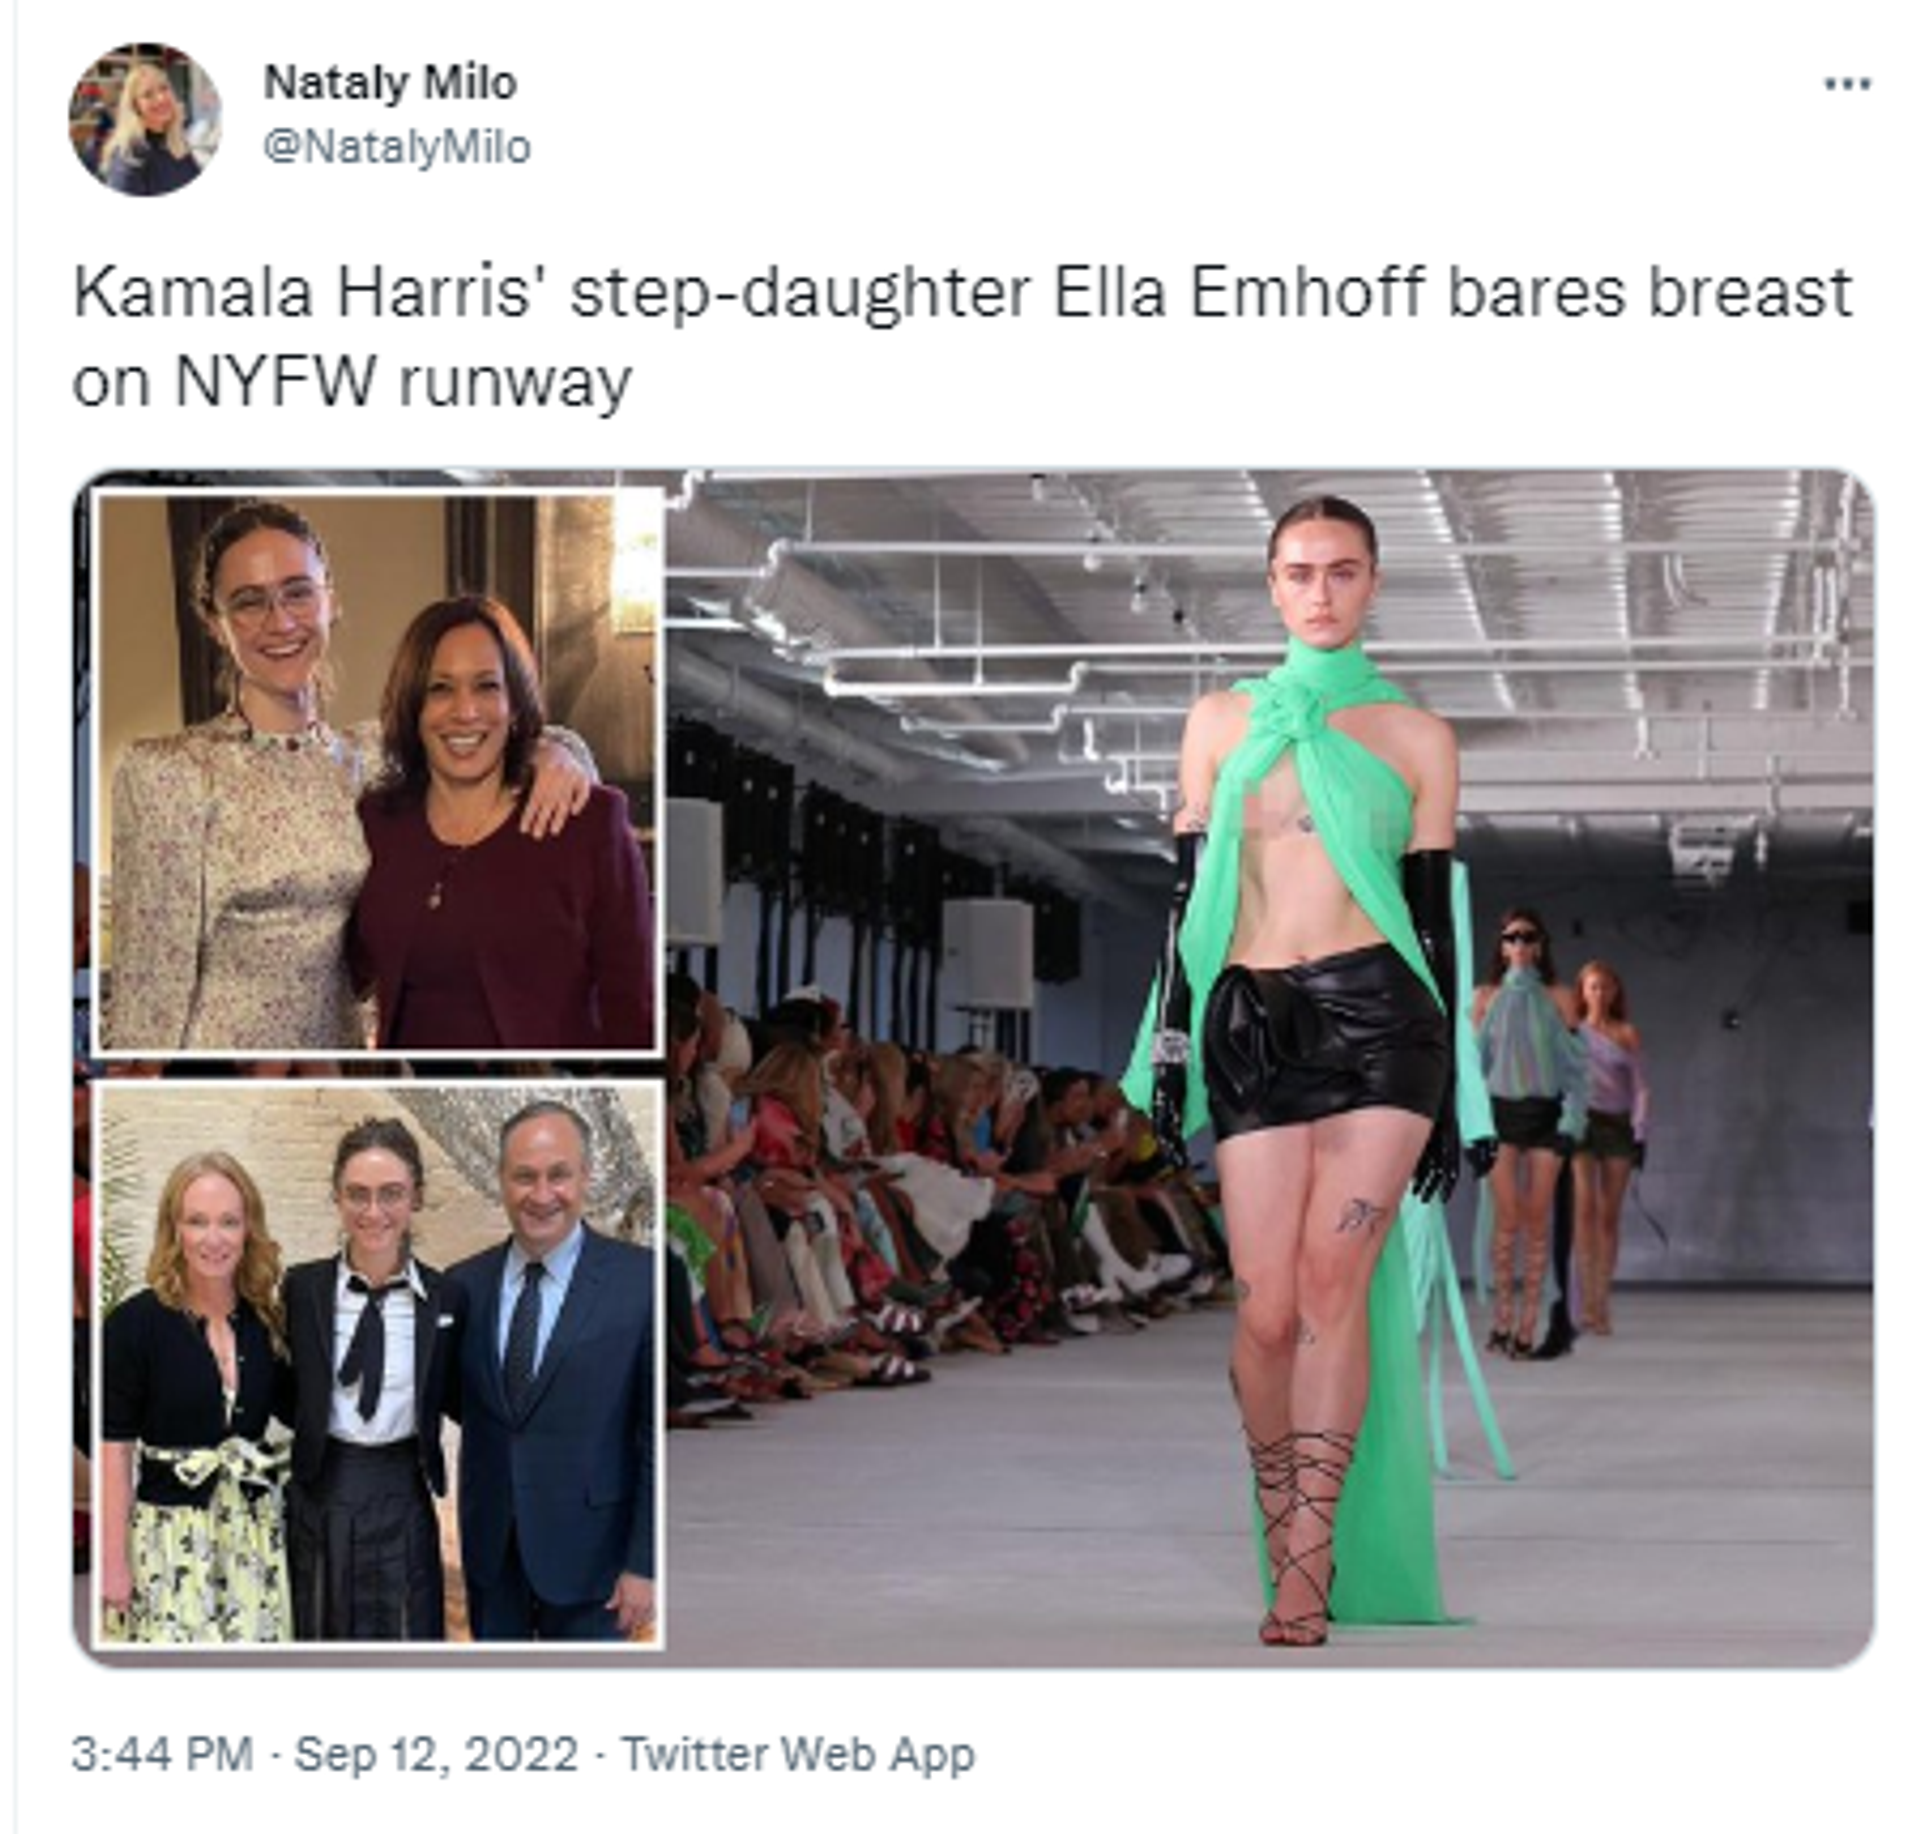 Kamala Harris’ step-daughter Ella Emhoff catwalk bare breast on New York Fashion Week Runway for designer Prabal Gurung  - Sputnik International, 1920, 12.09.2022